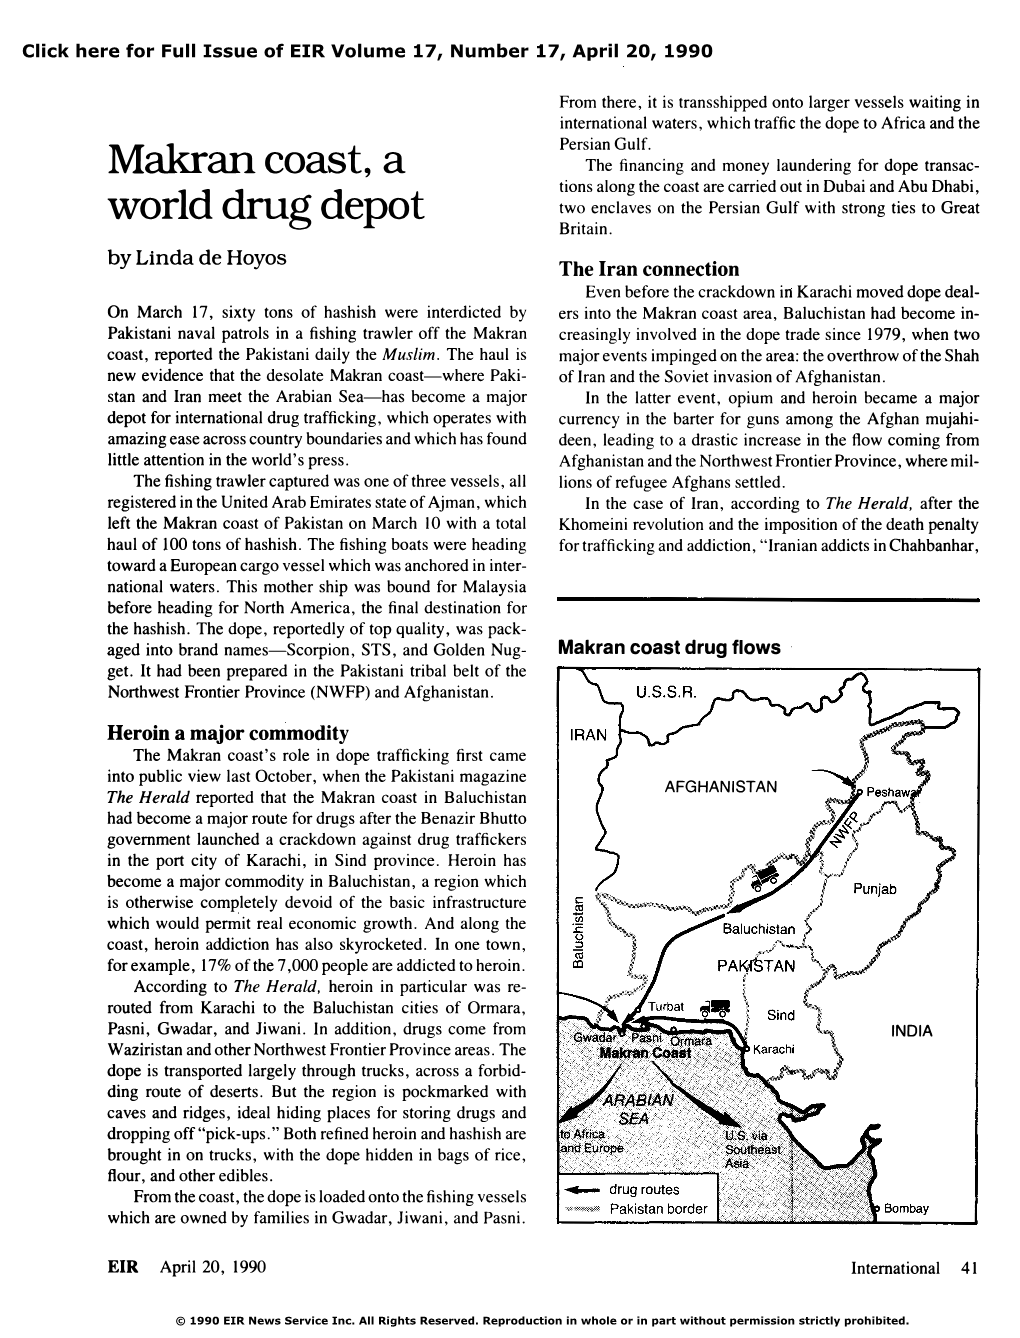 Makran Coast, a World Drug Depot